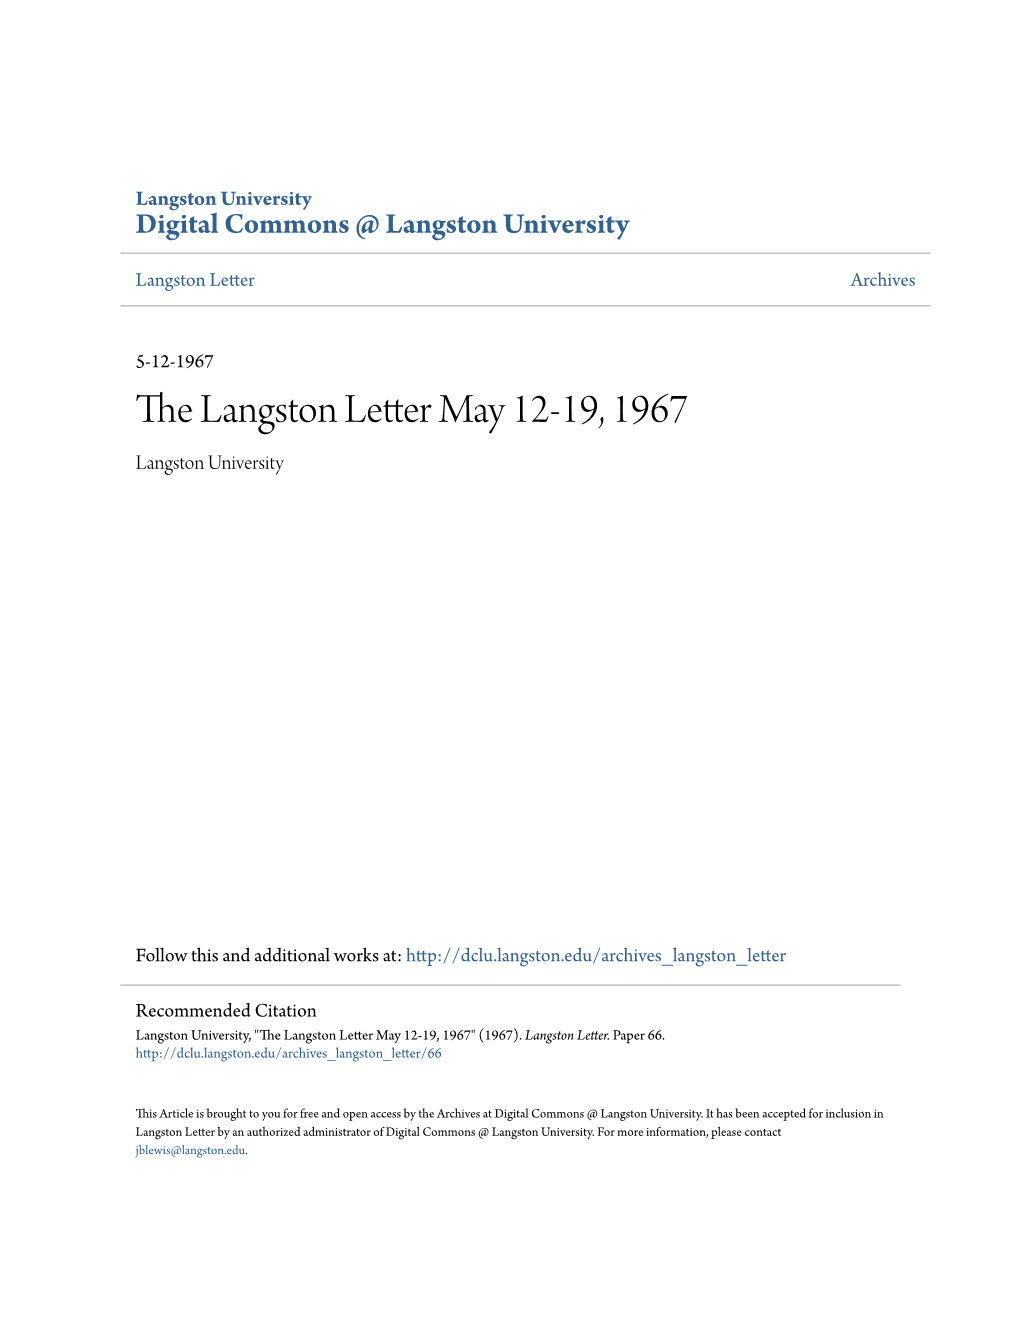 The Langston Letter May 12-19, 1967 Langston University